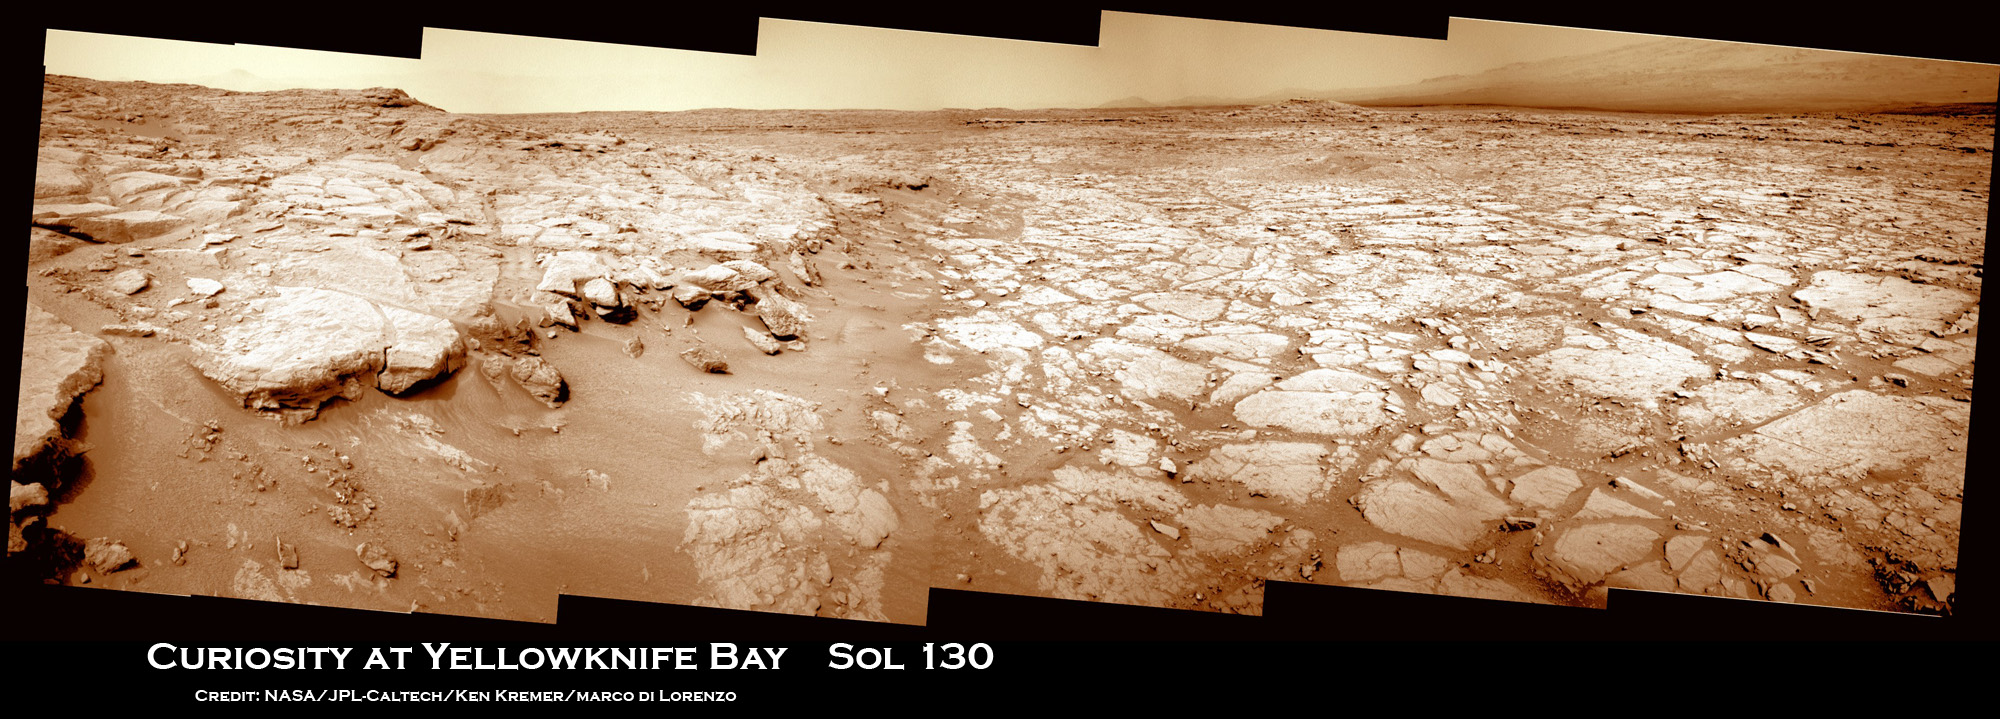 Curiosity-at-Yellowknife-Bay-Sol-130_3a_Ken-Kremer.jpg